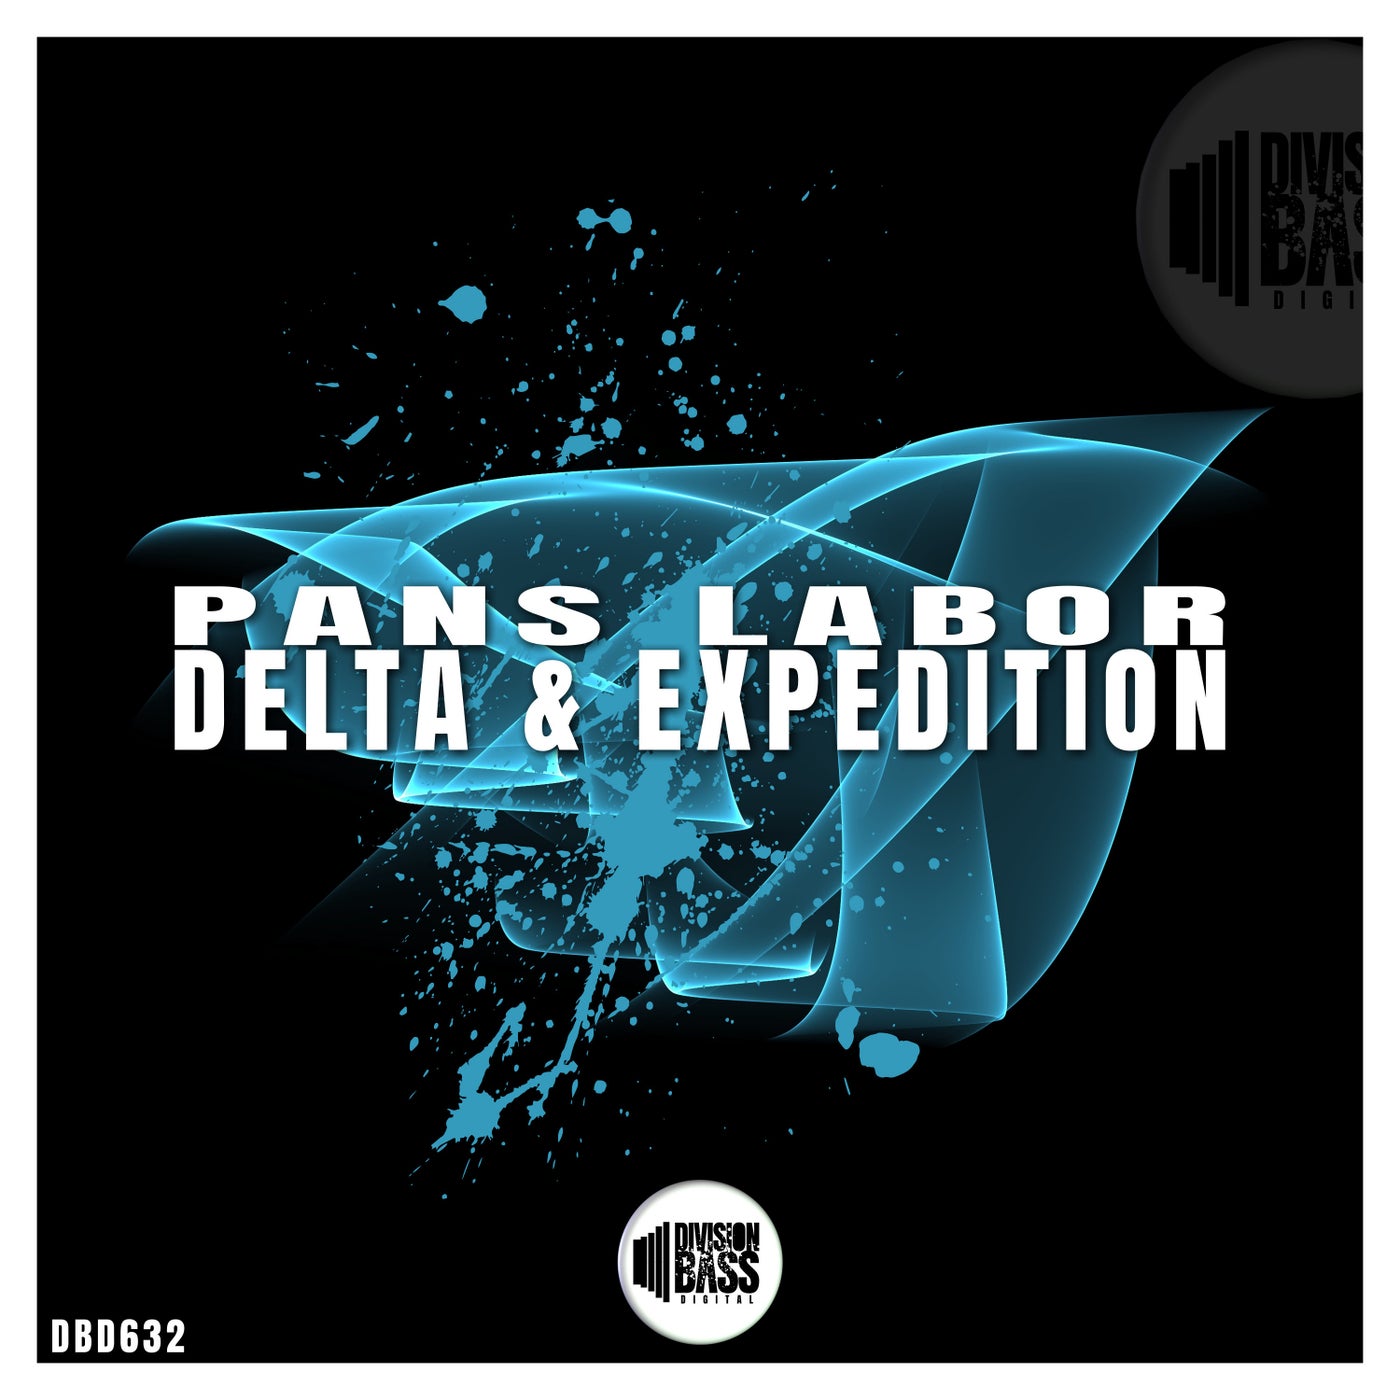 Delta & Expedition